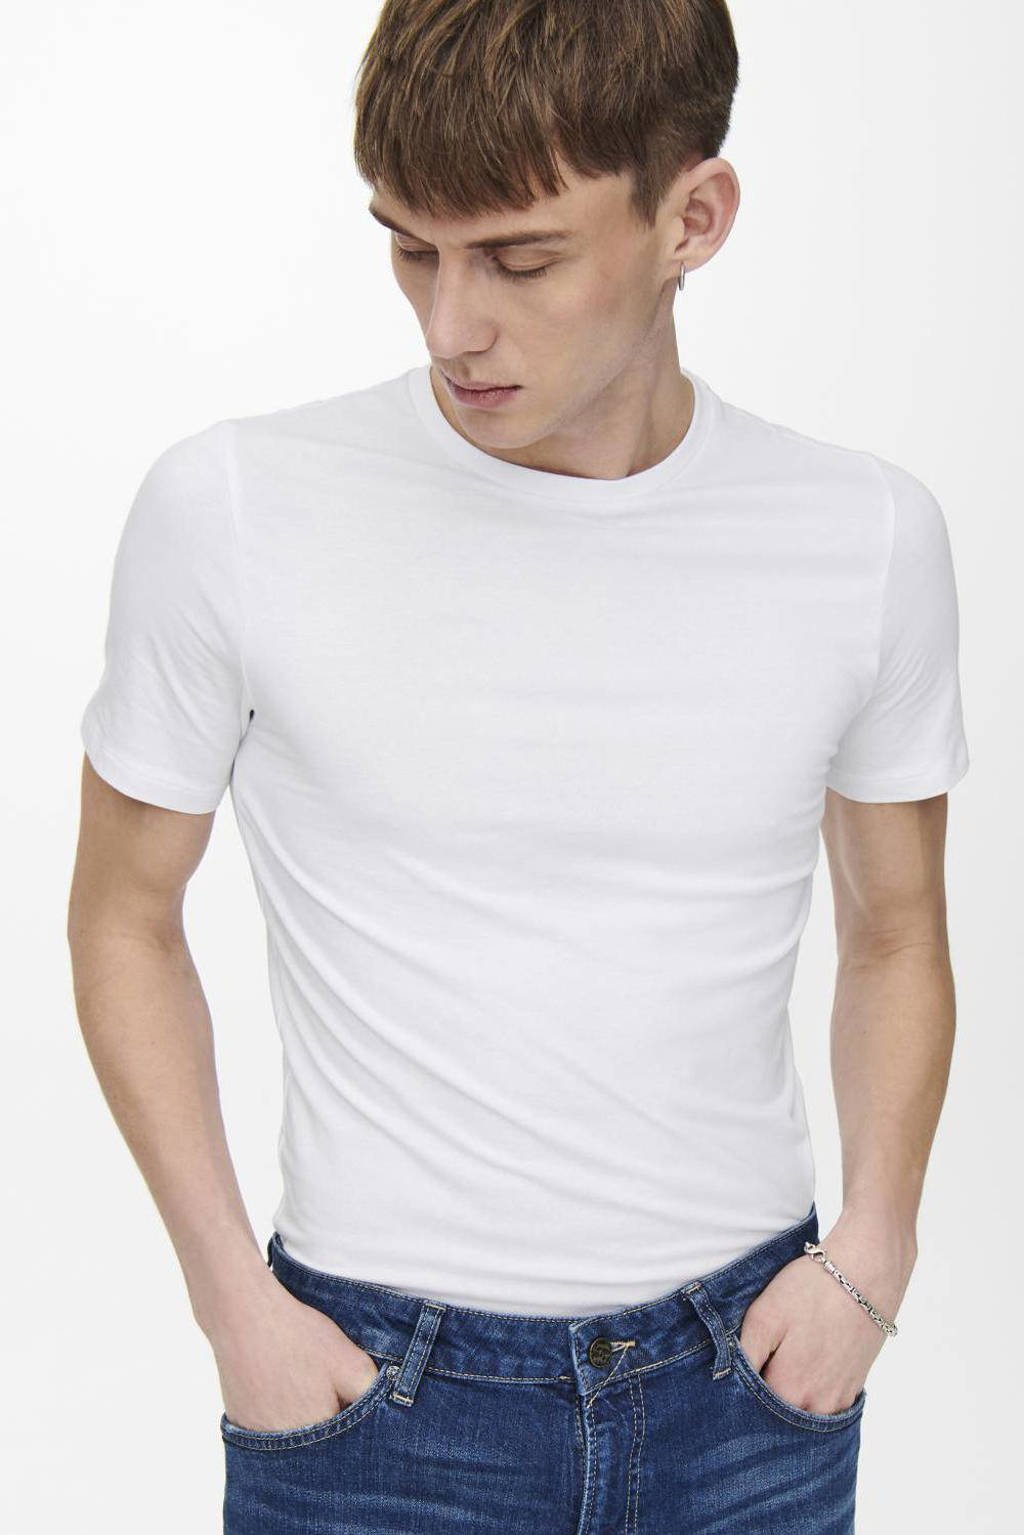 & slim fit T-shirt (set van 2) ONSBASIC white wehkamp